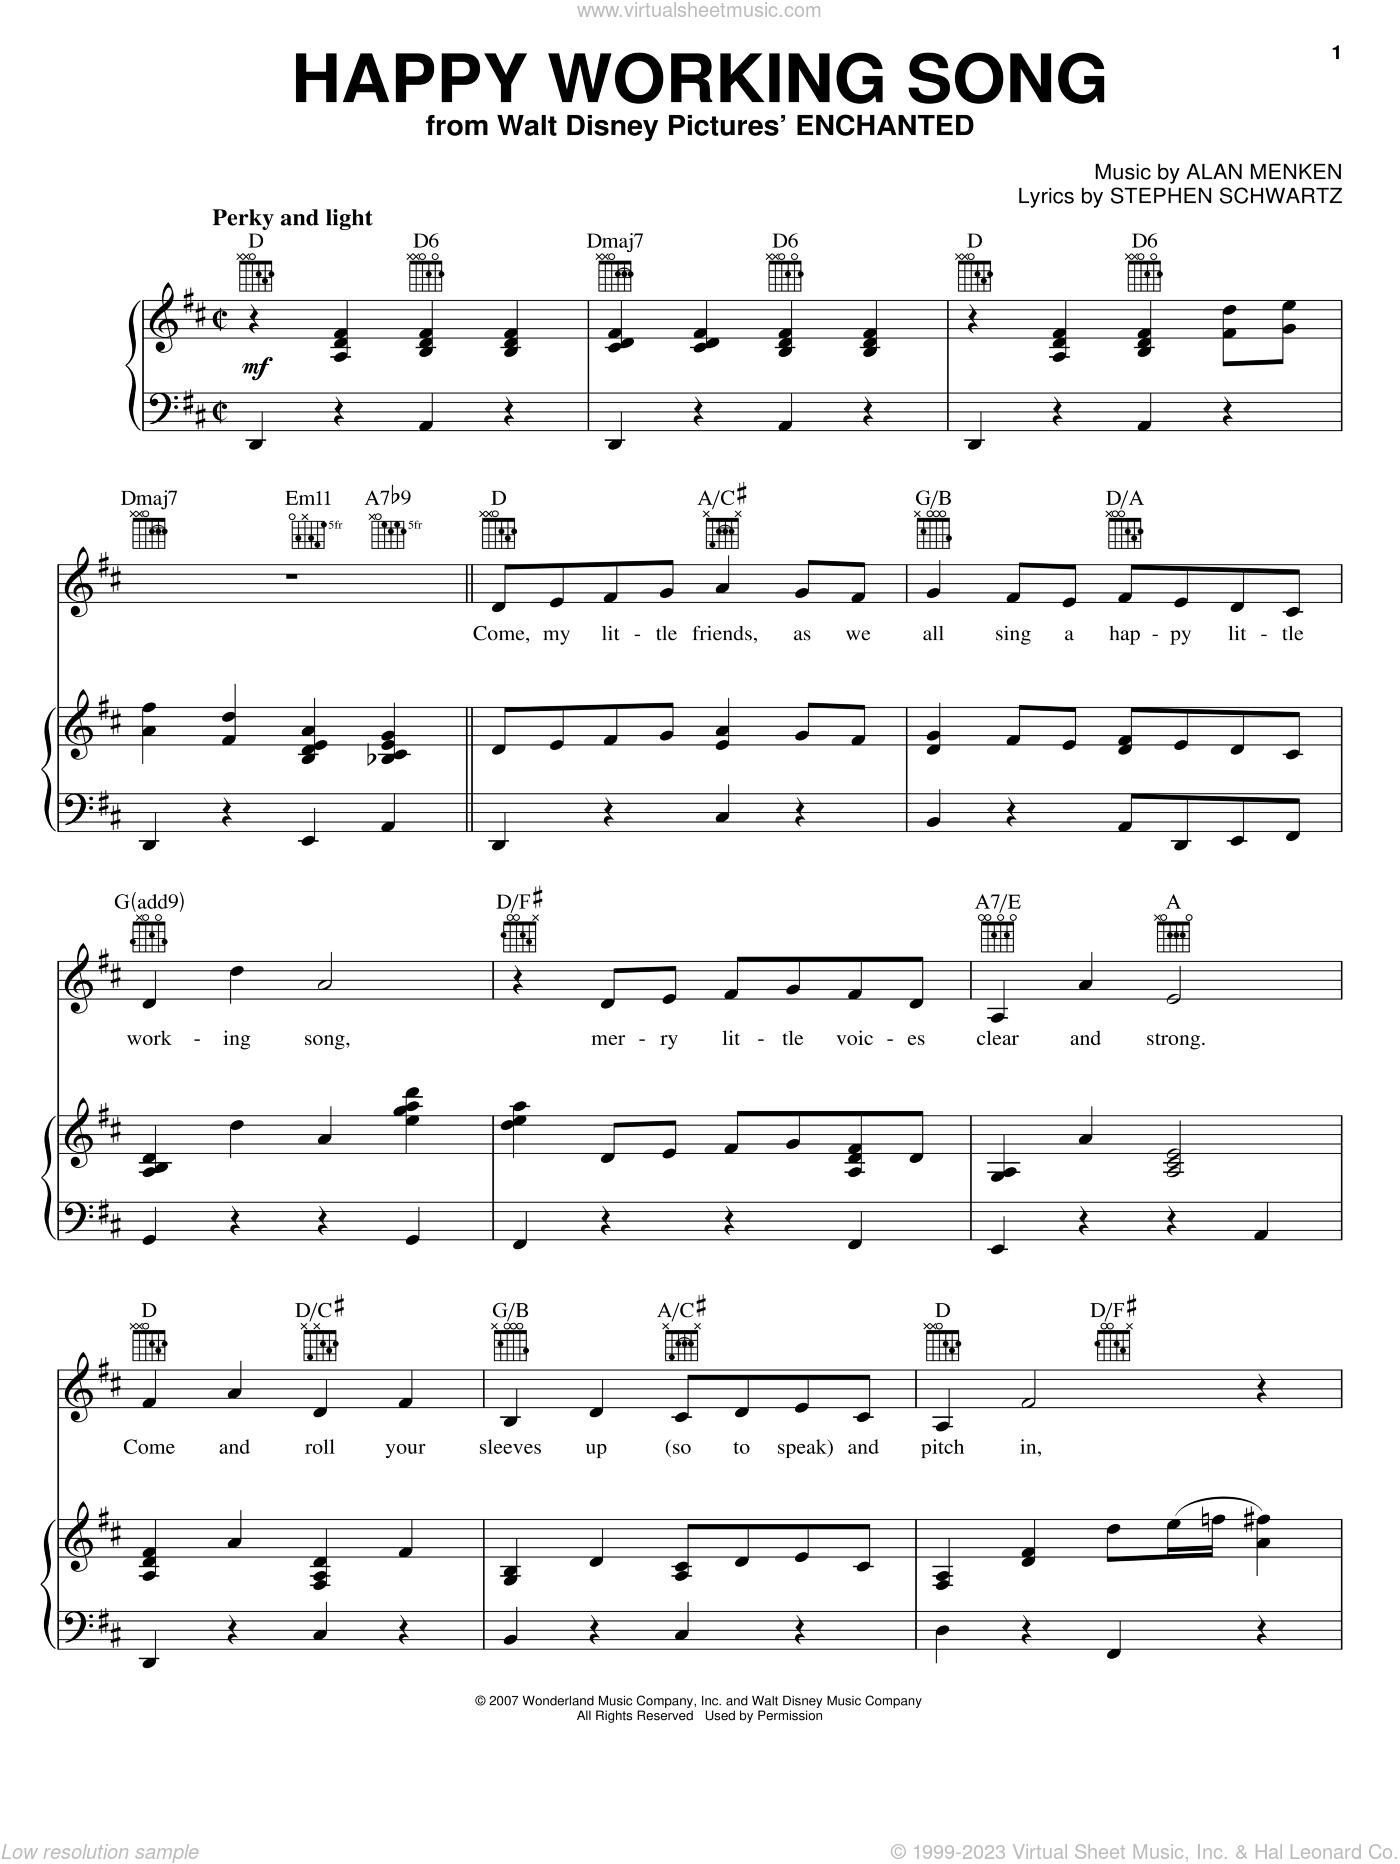 Chords for Piano and Organ - Etsy